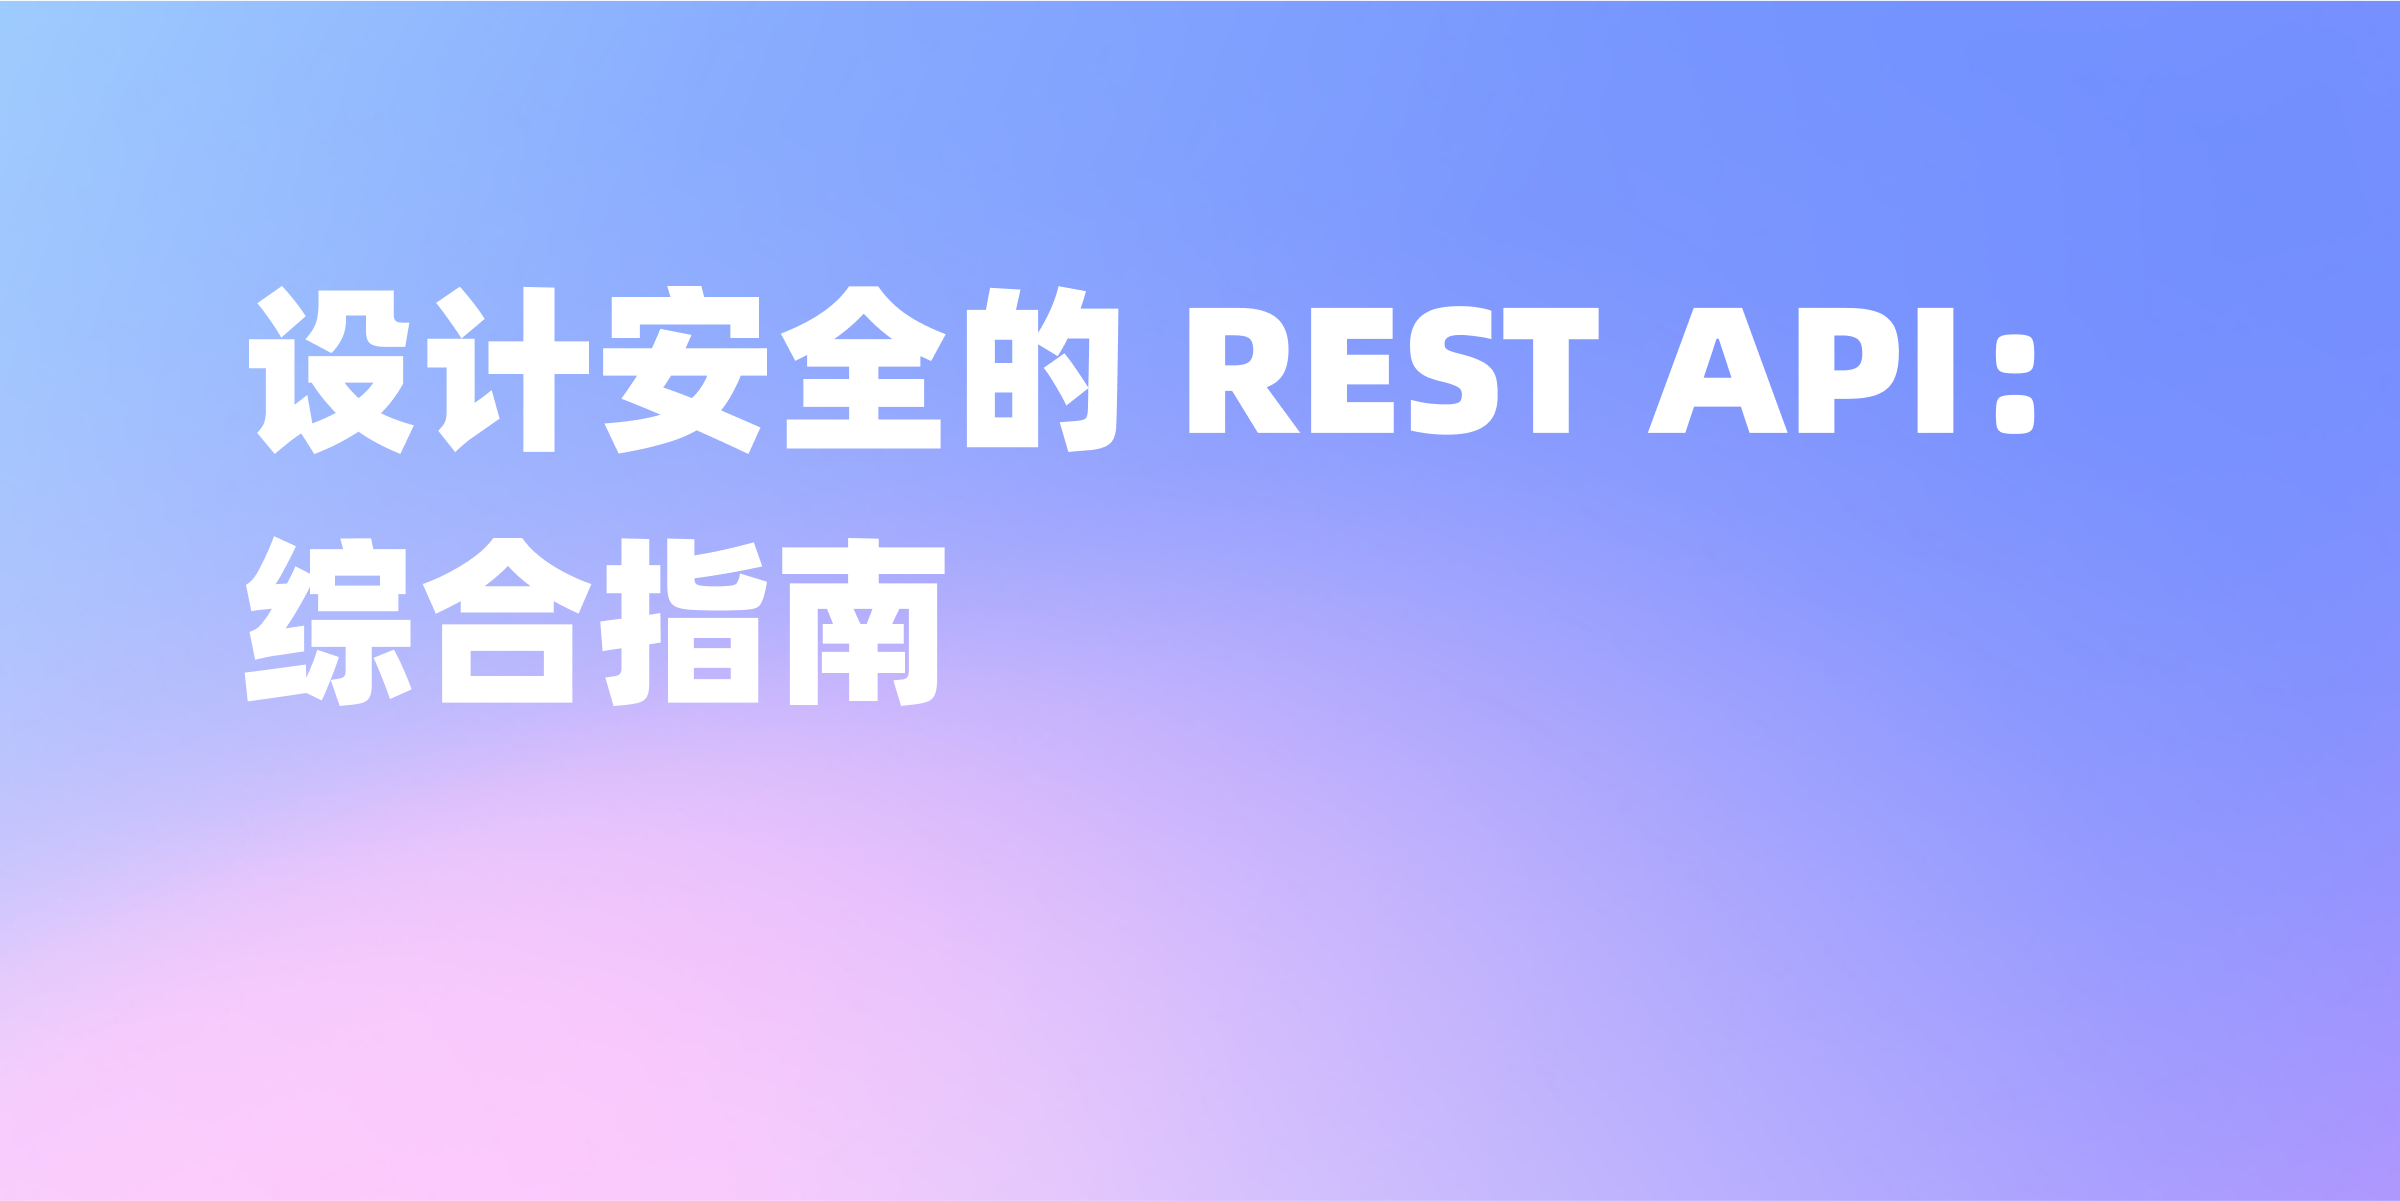 REST API 安全设计指南